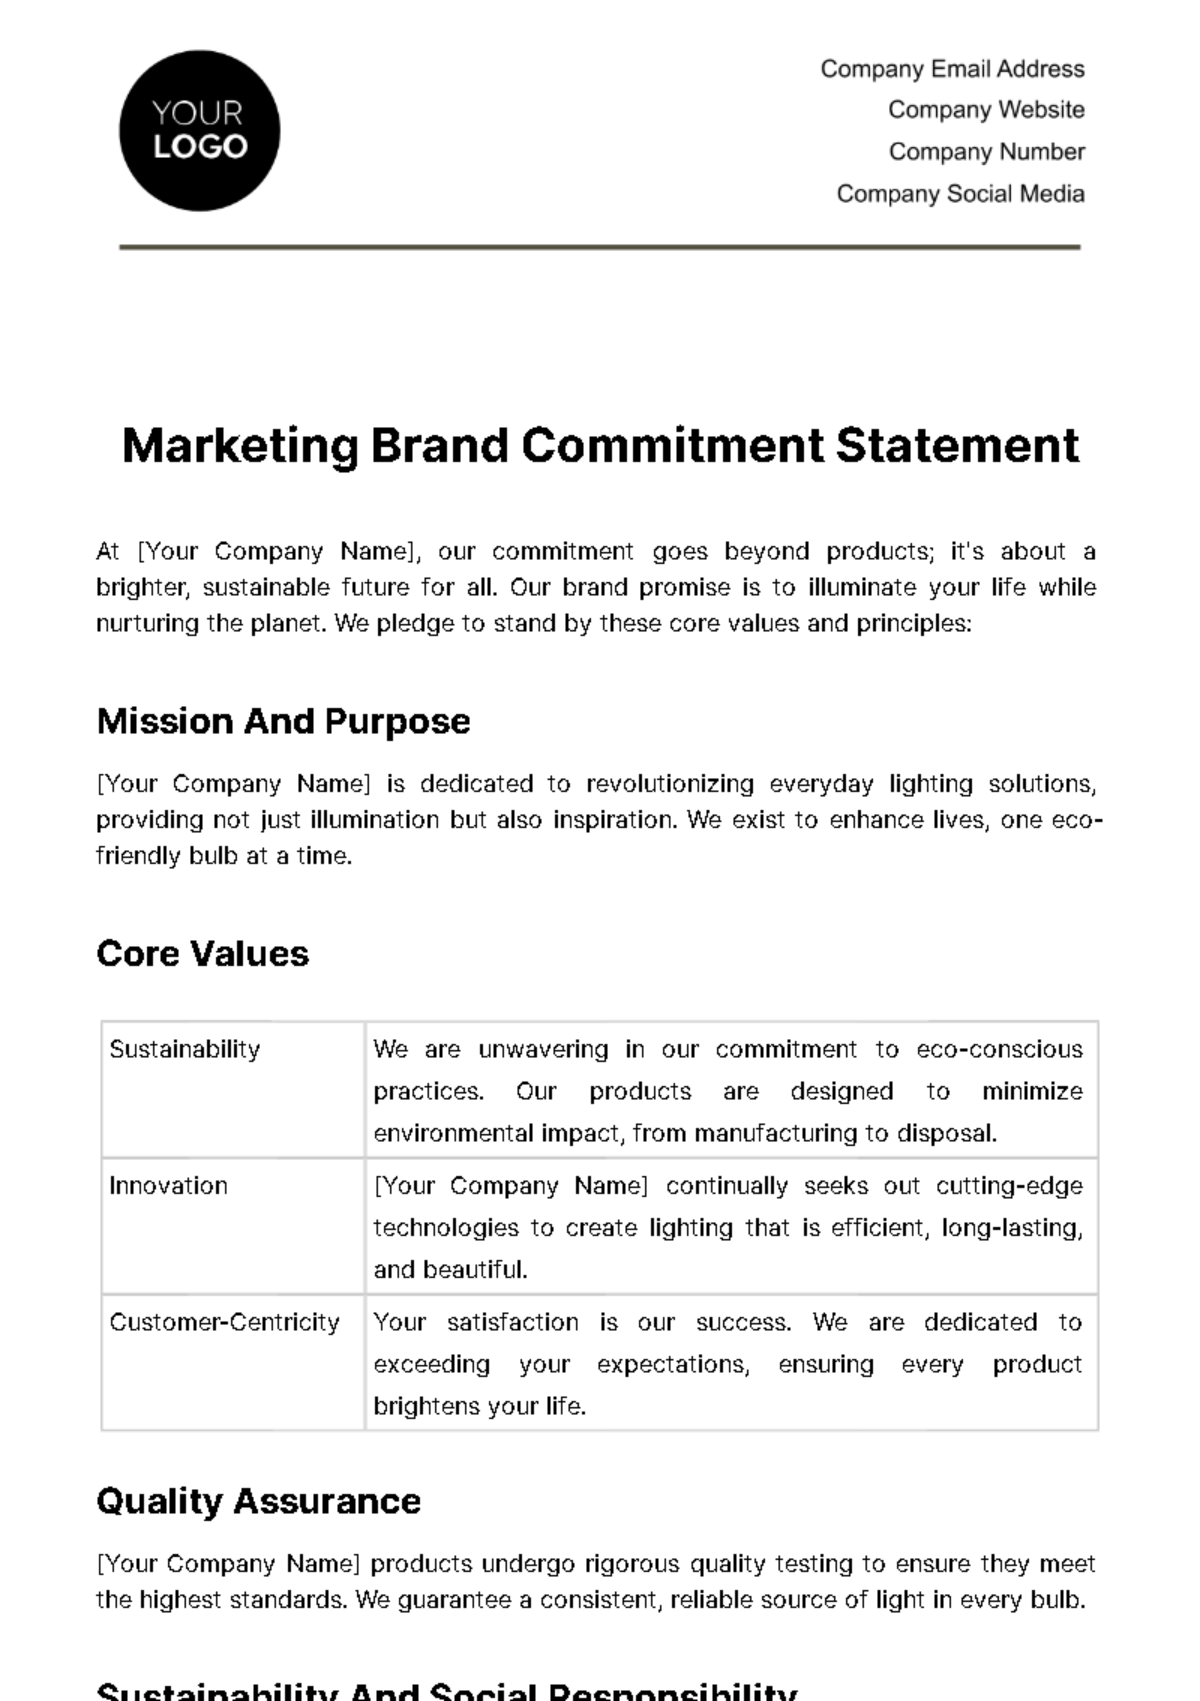 Free Marketing Brand Commitment Statement Template